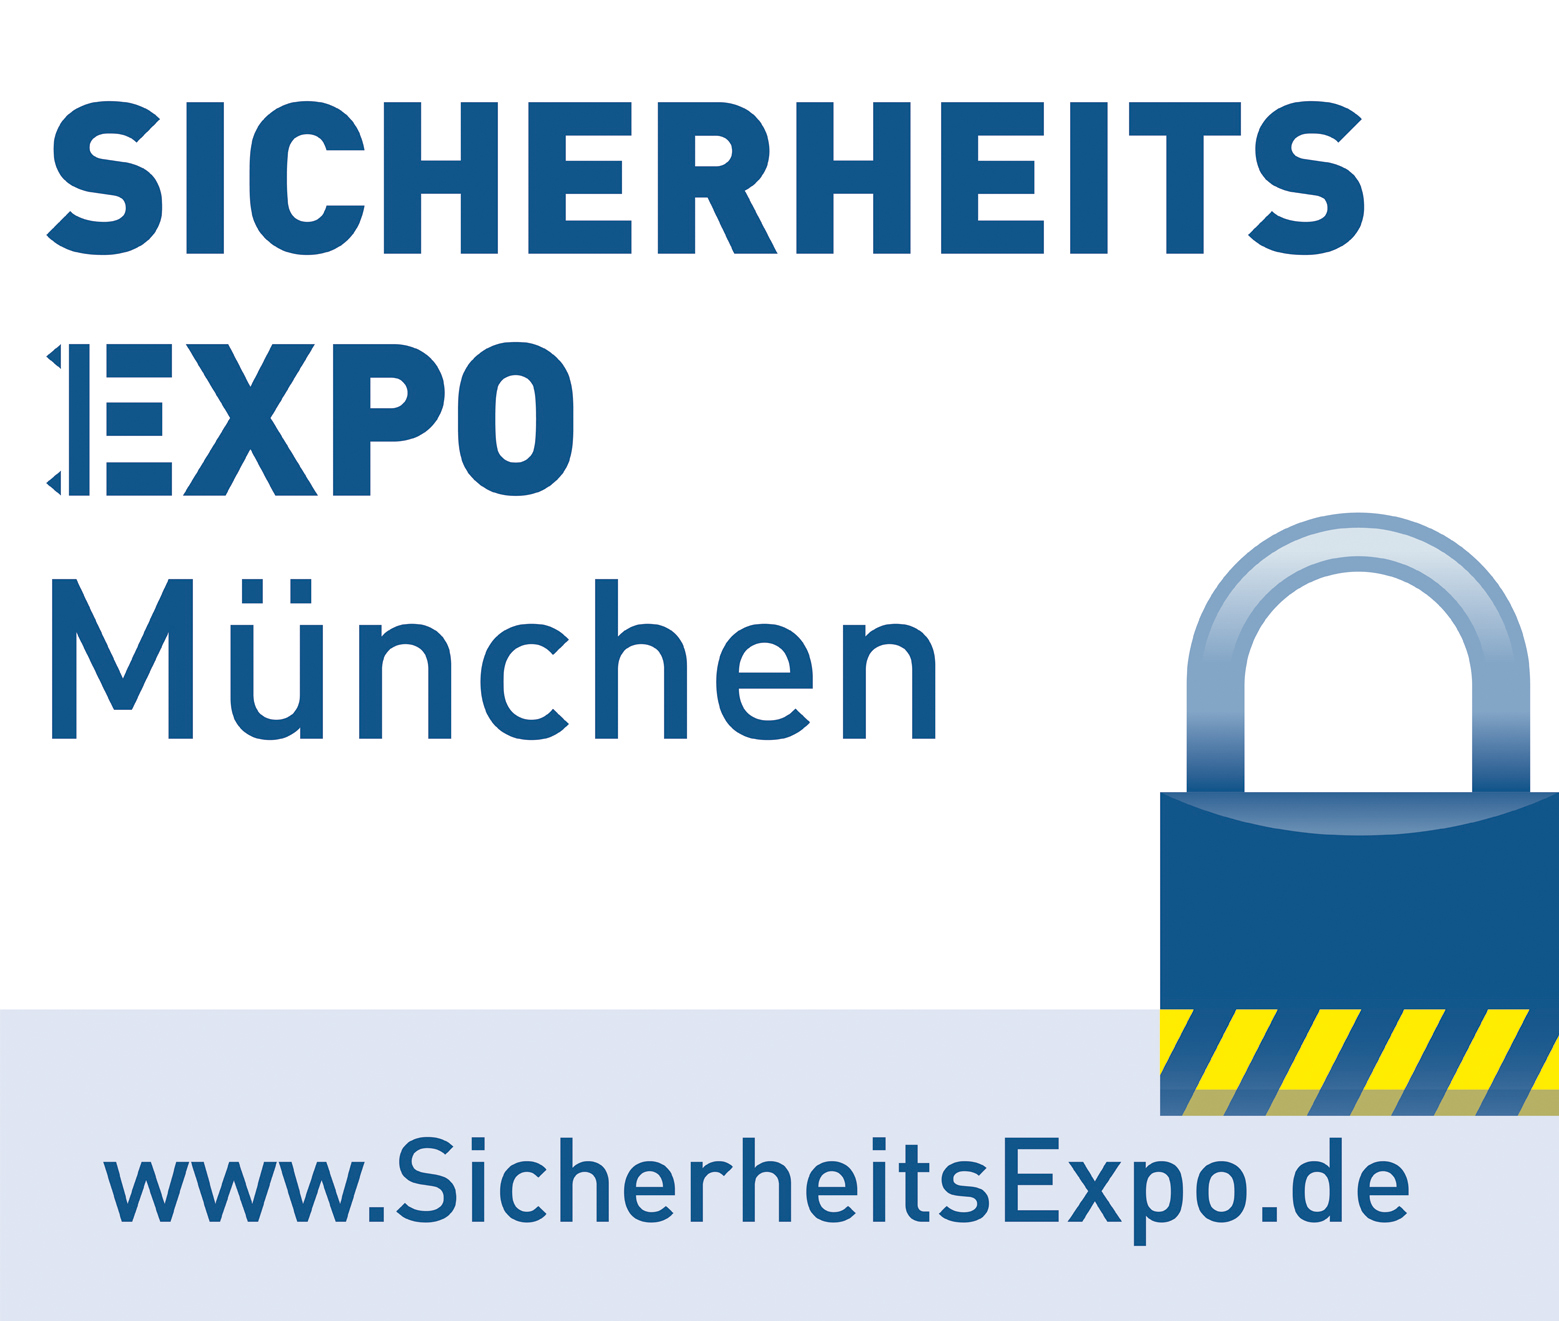 Sicherheits Expo München 2020 Dahua Highlights